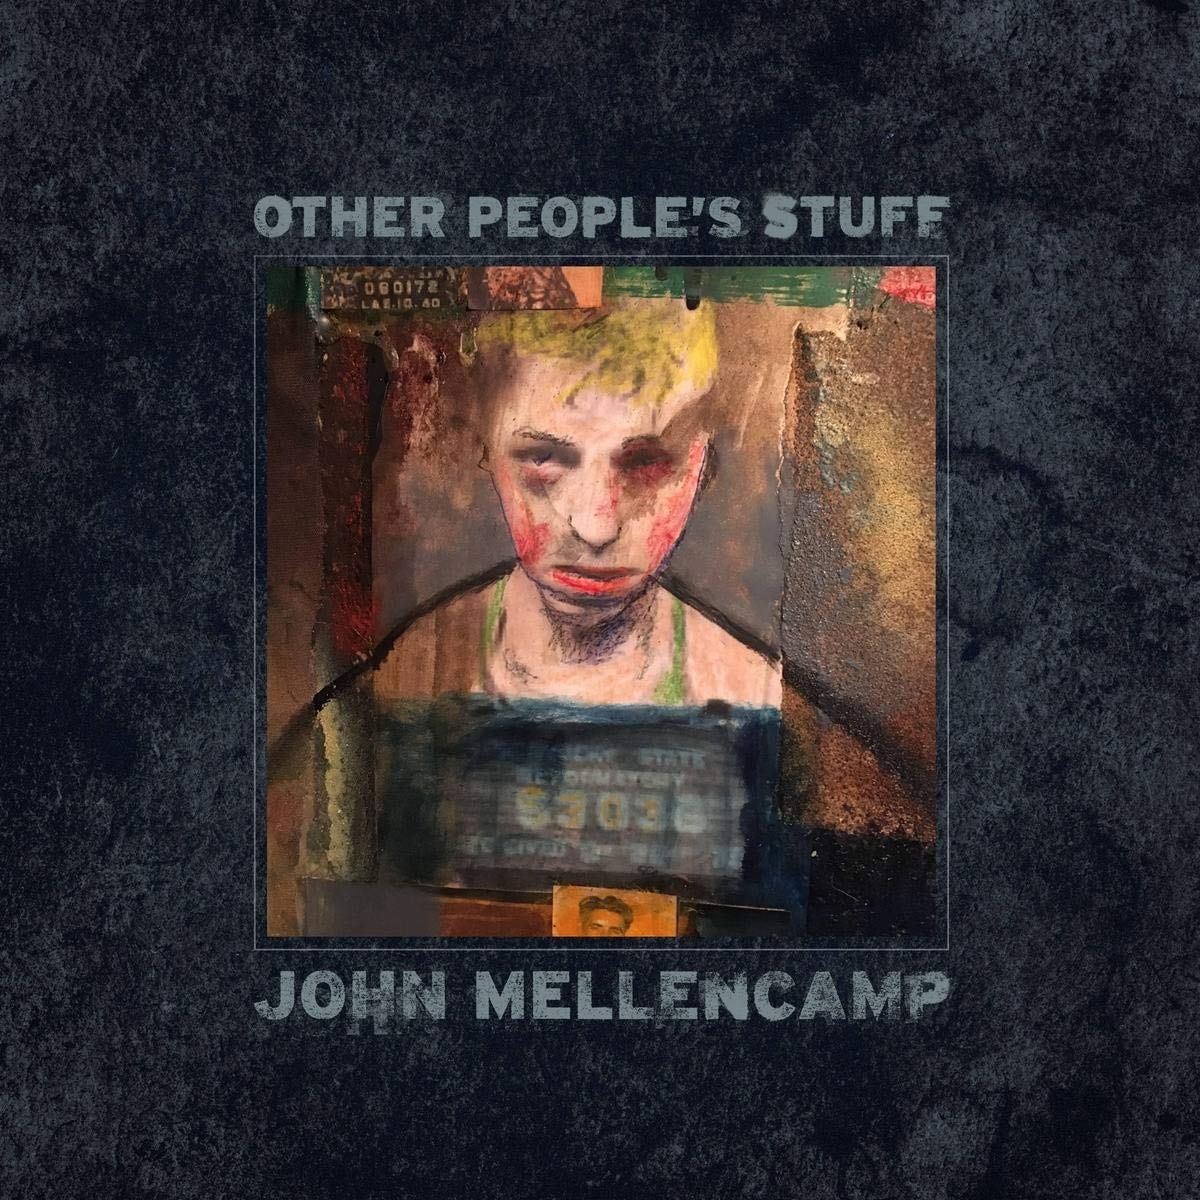 pop 02 19 John Mellencamp